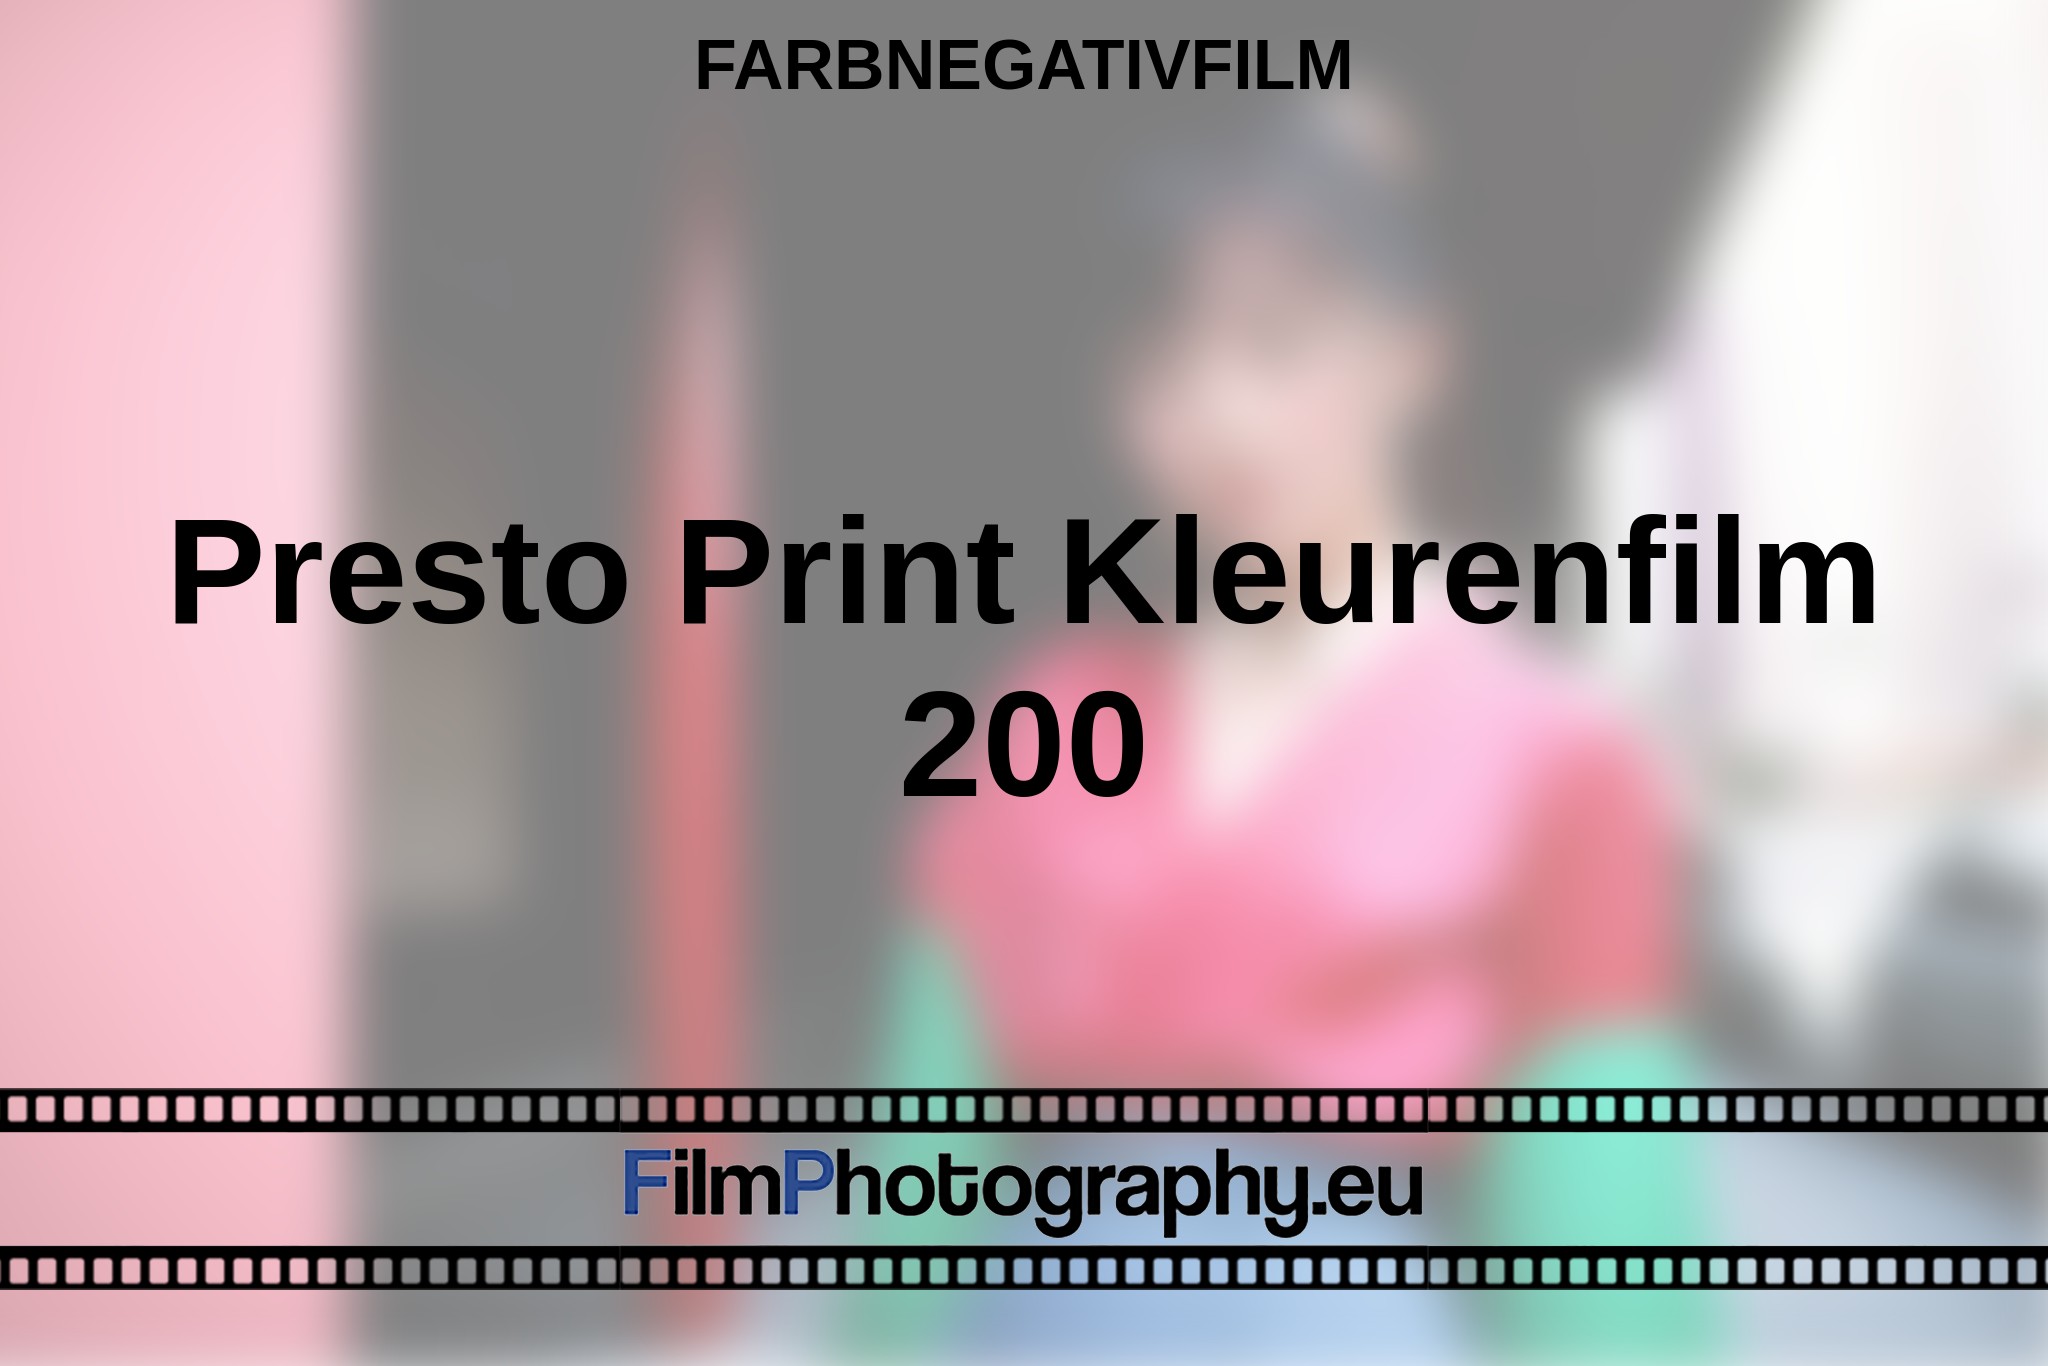 presto-print-kleurenfilm-200-farbnegativfilm-bnv.jpg